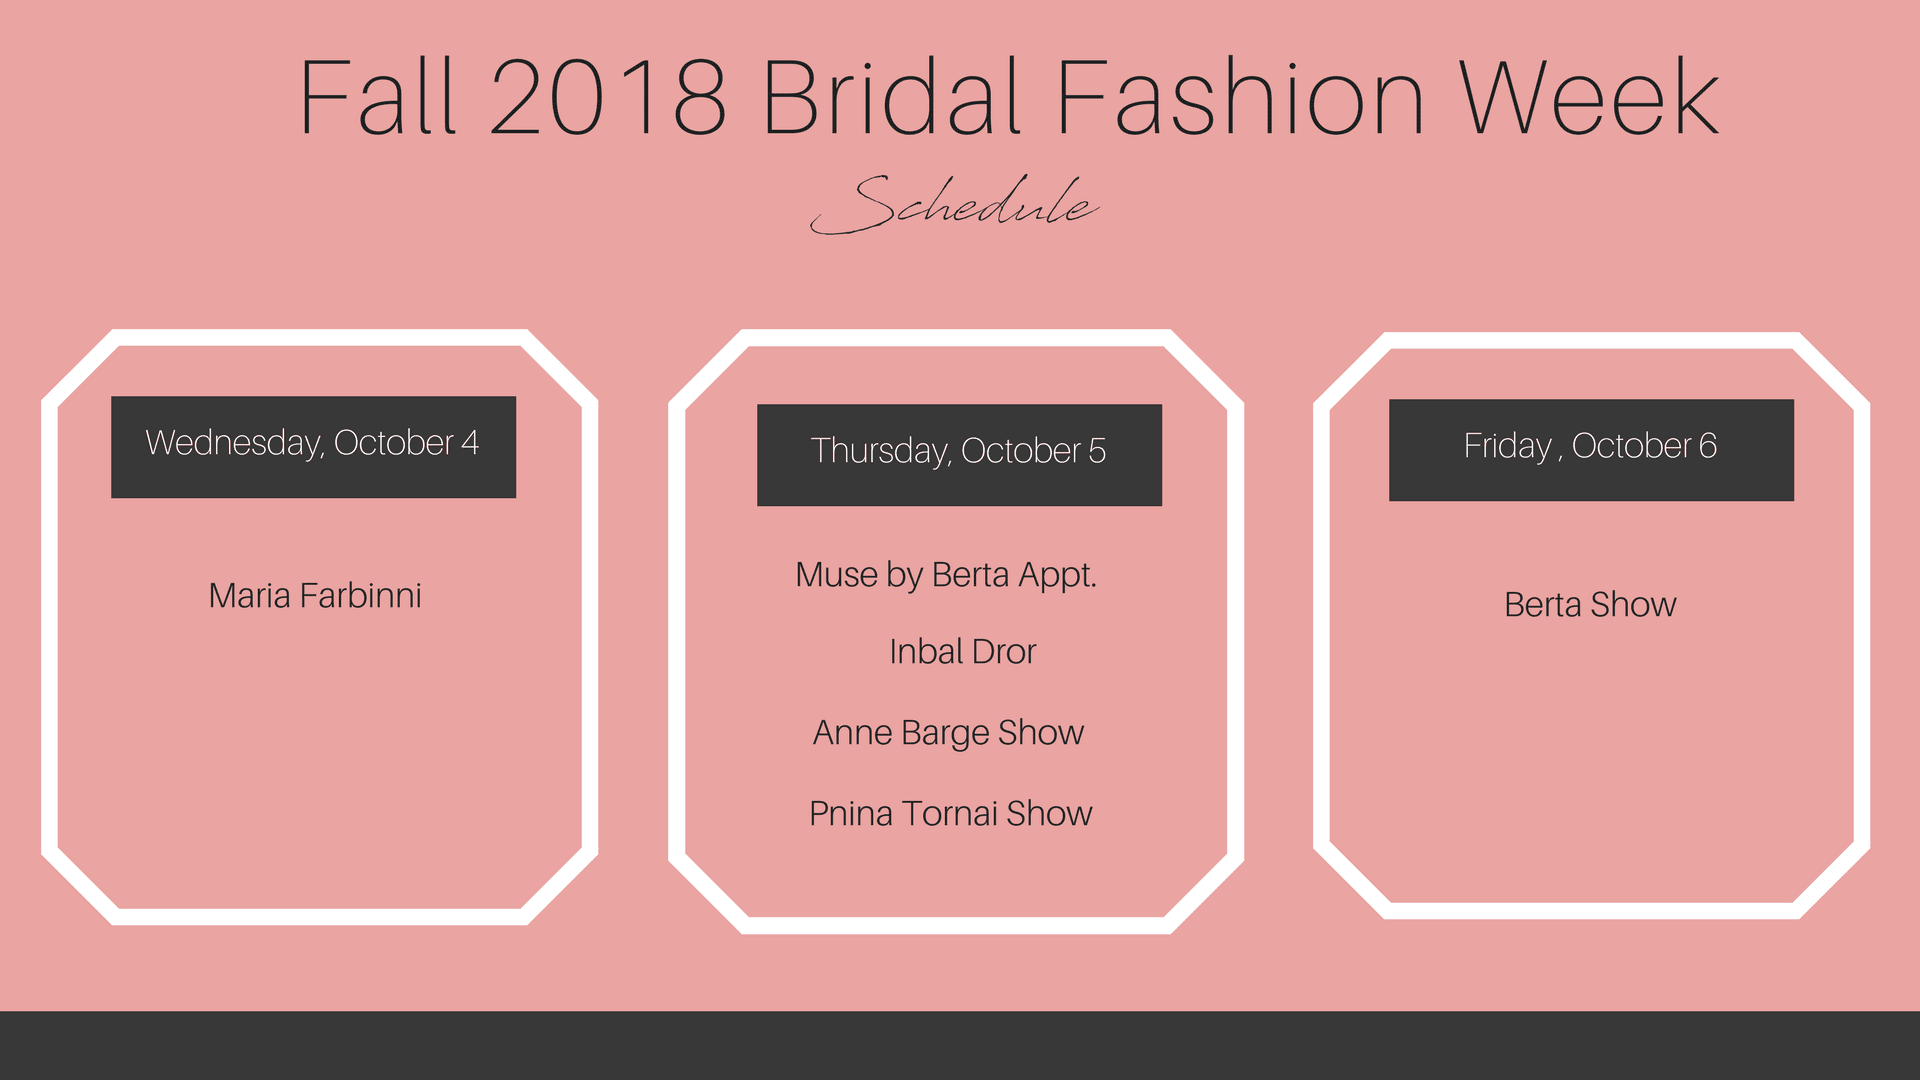 Fall 2018 Bridal Fashion Week Version 2.png